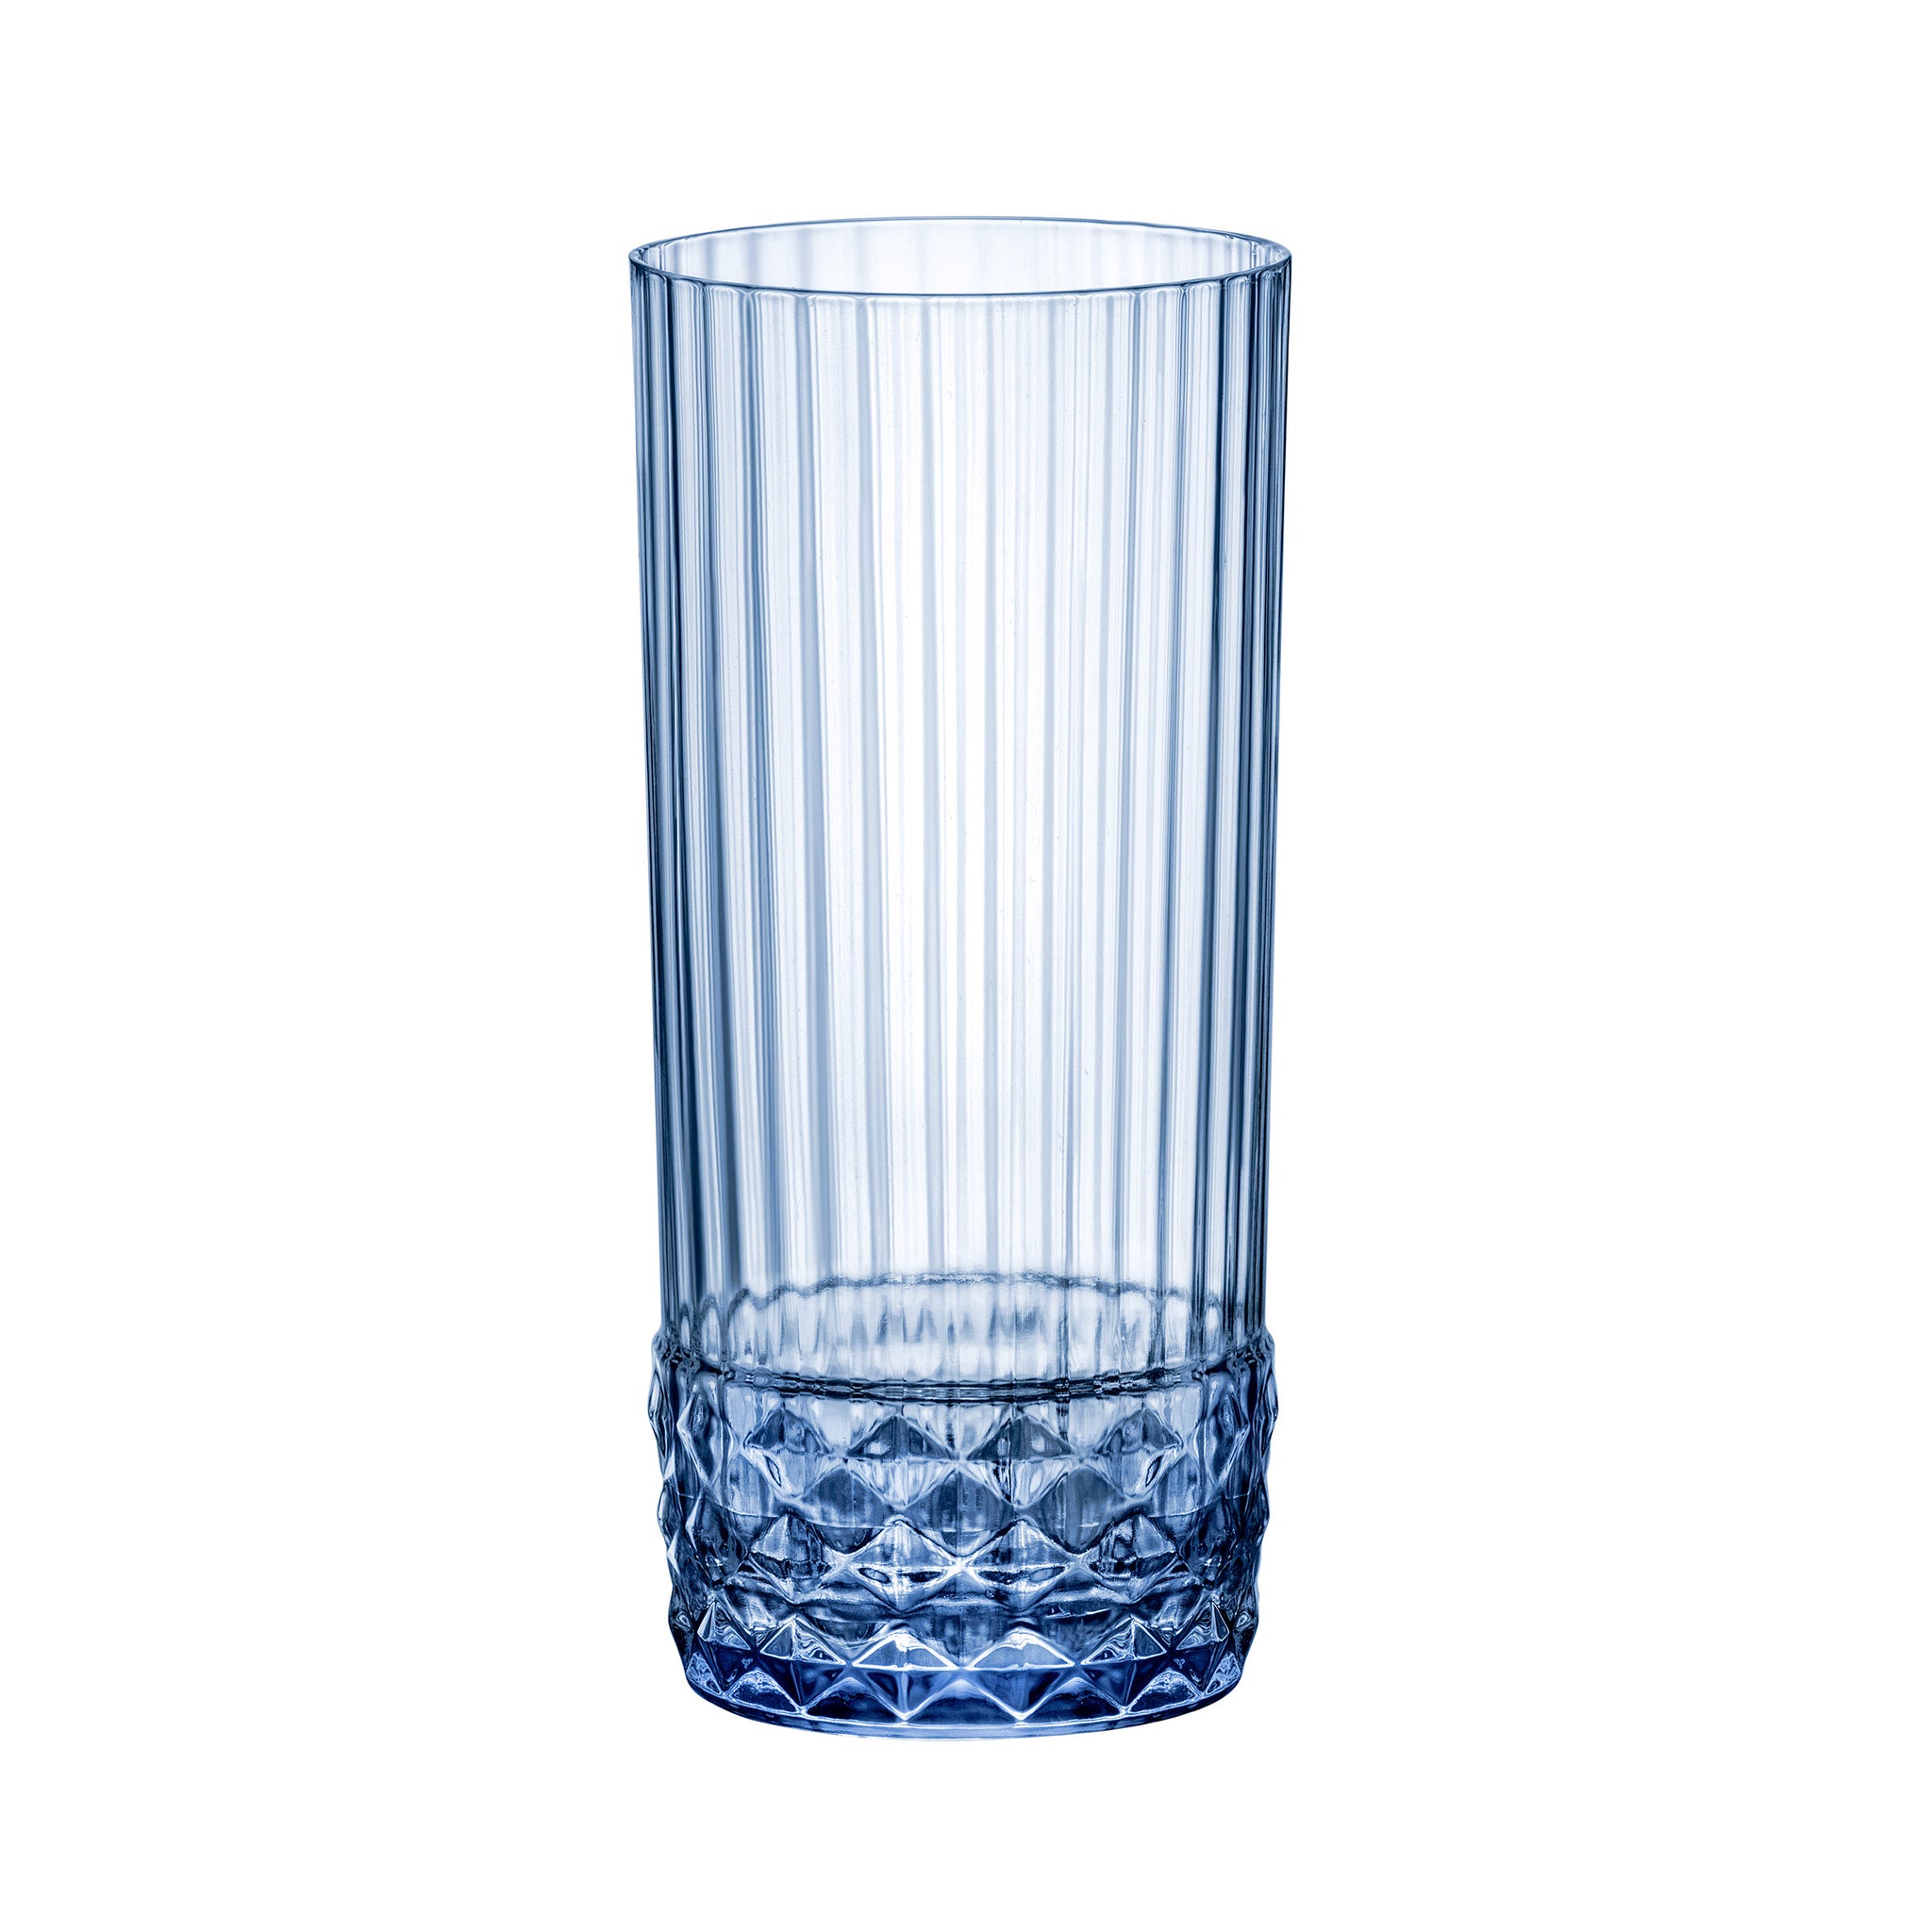 America '20s 16.25 oz. Cooler Drinking Glasses, Sapphire Blue (Set of 6)